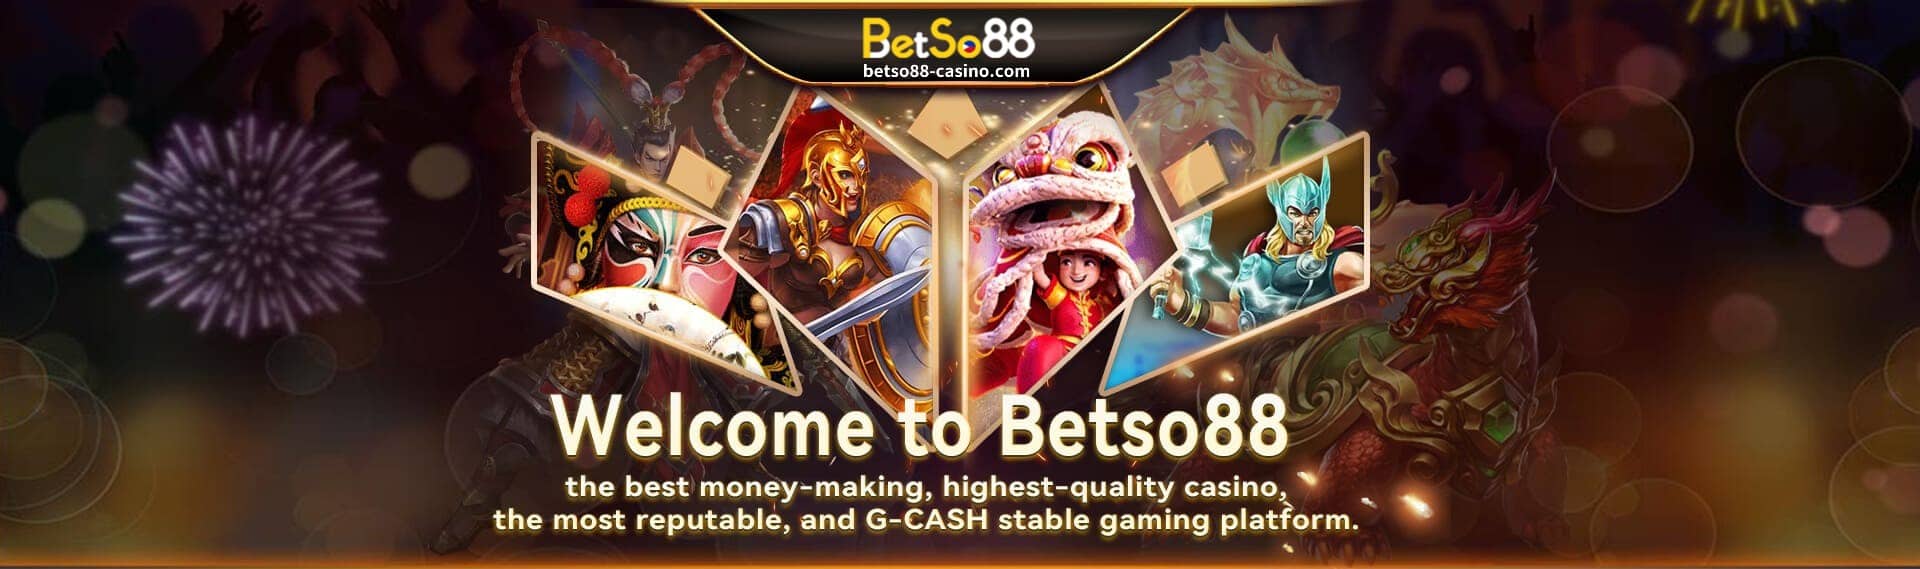 BetSo88 Online Casino